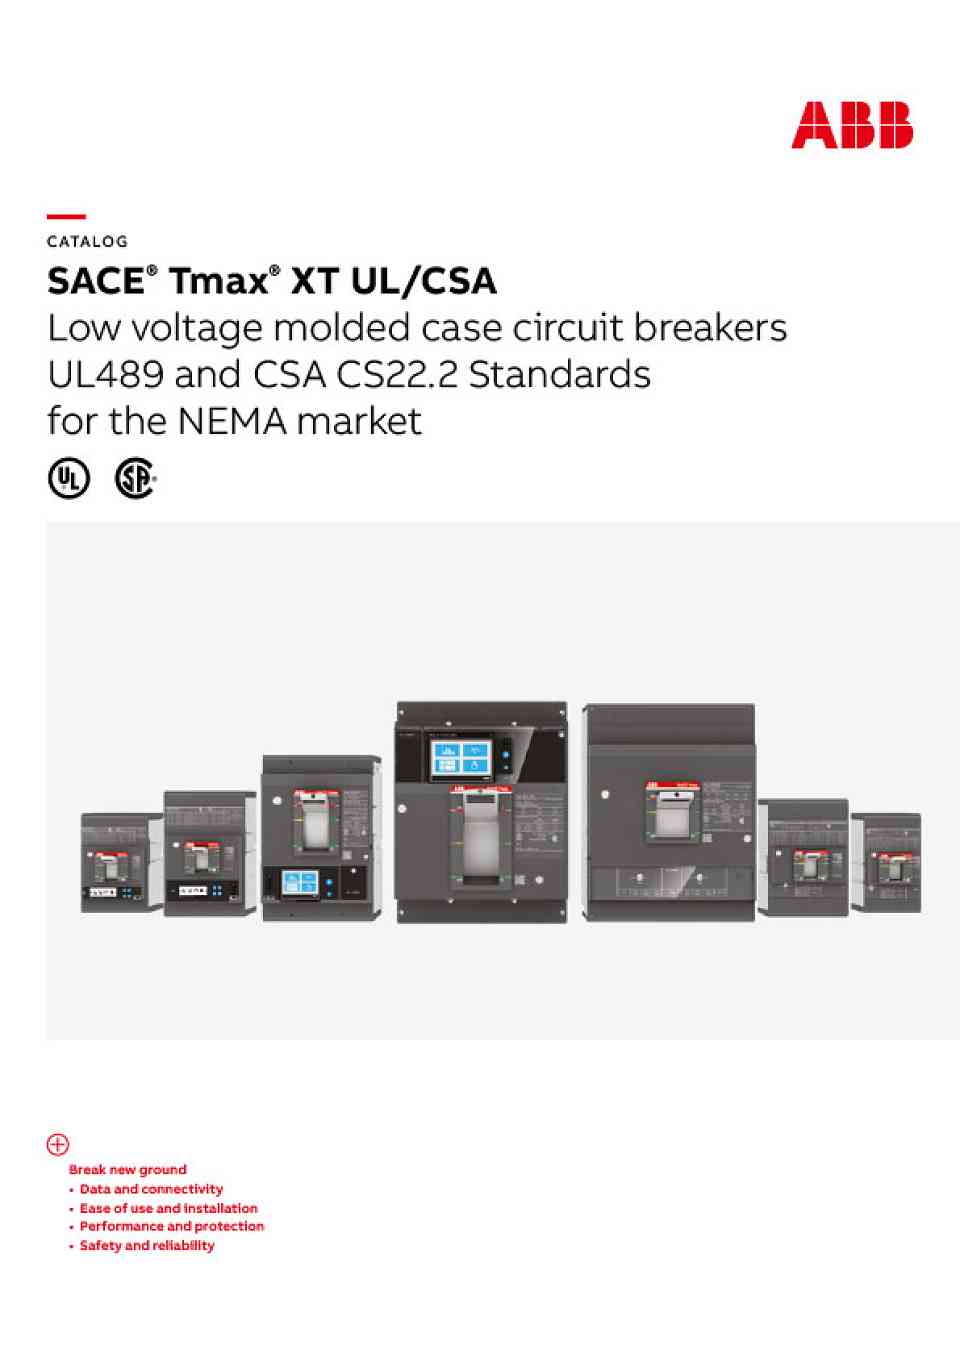 SACE Tmax XT UL/CSA Catalogue Cover